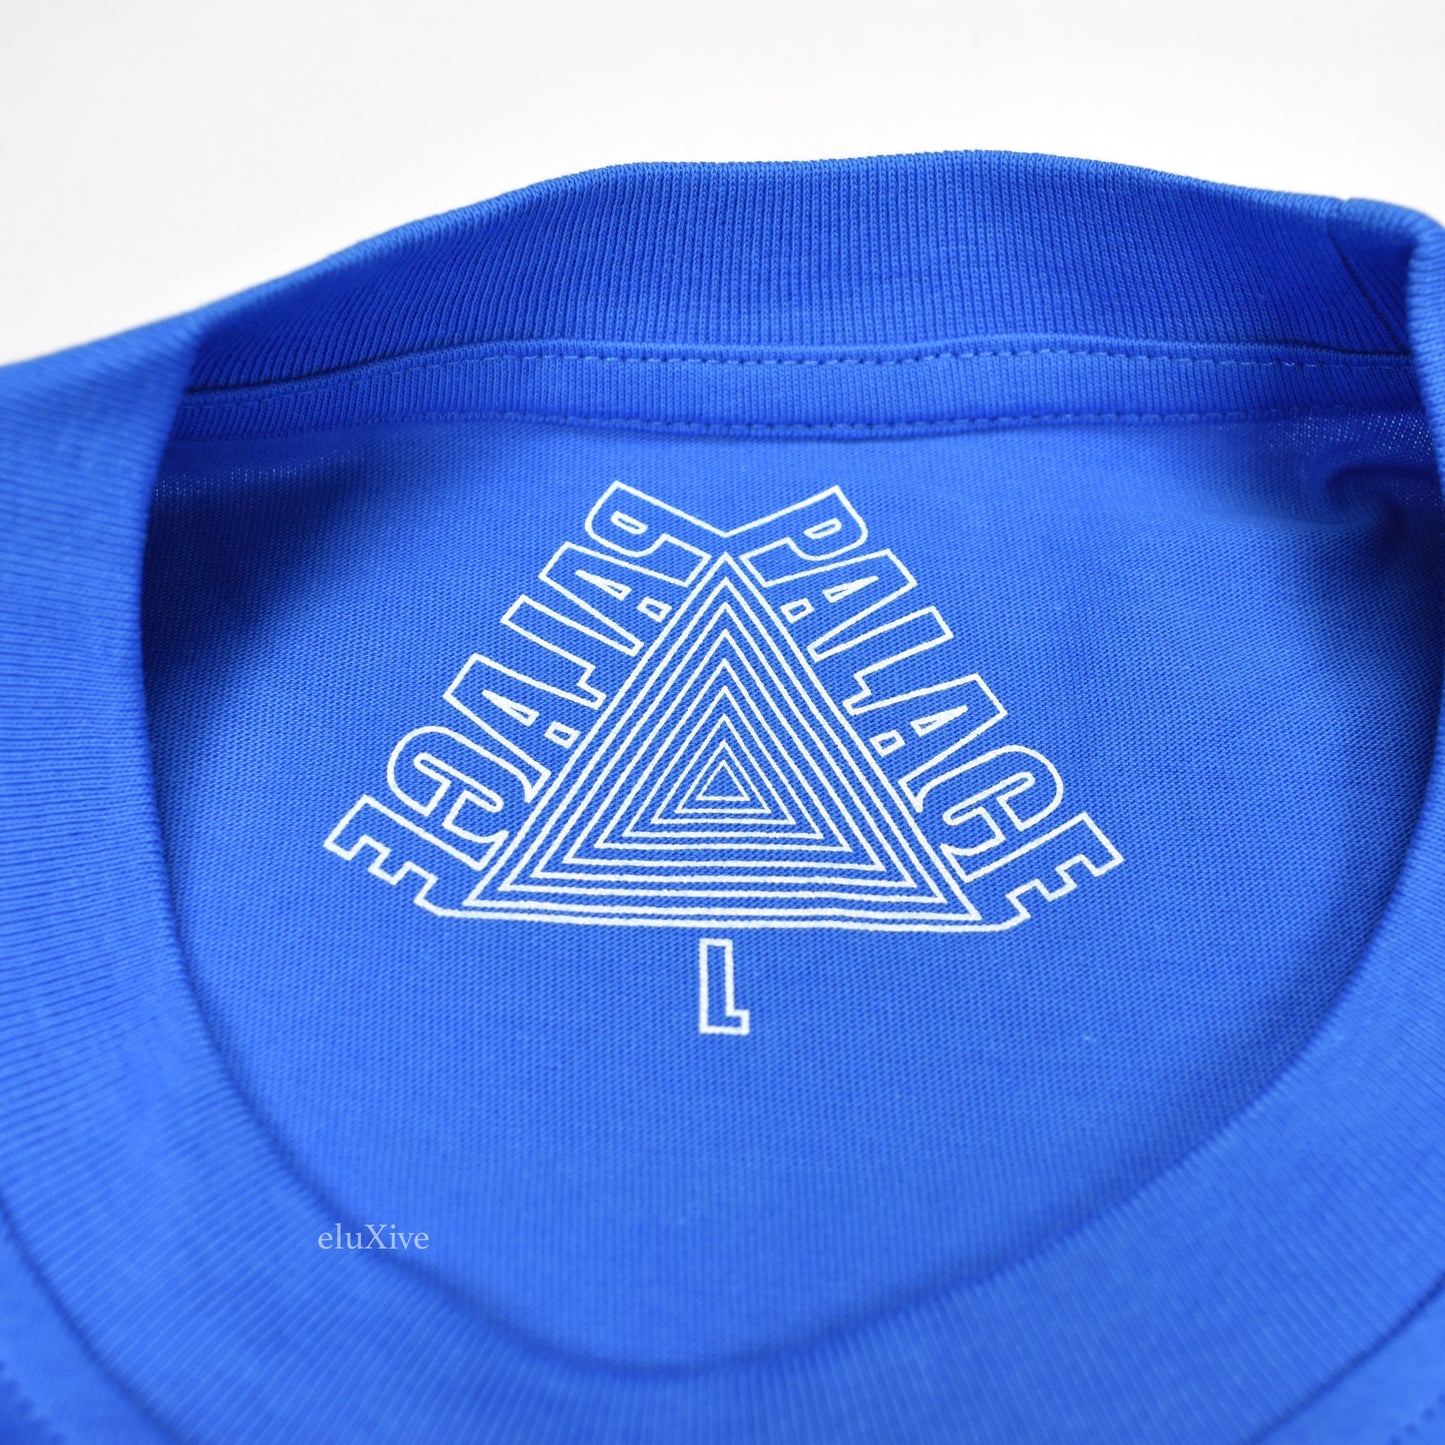 Palace - Bell Man Tri-Ferg Logo Phone Number T-Shirt (Blue)